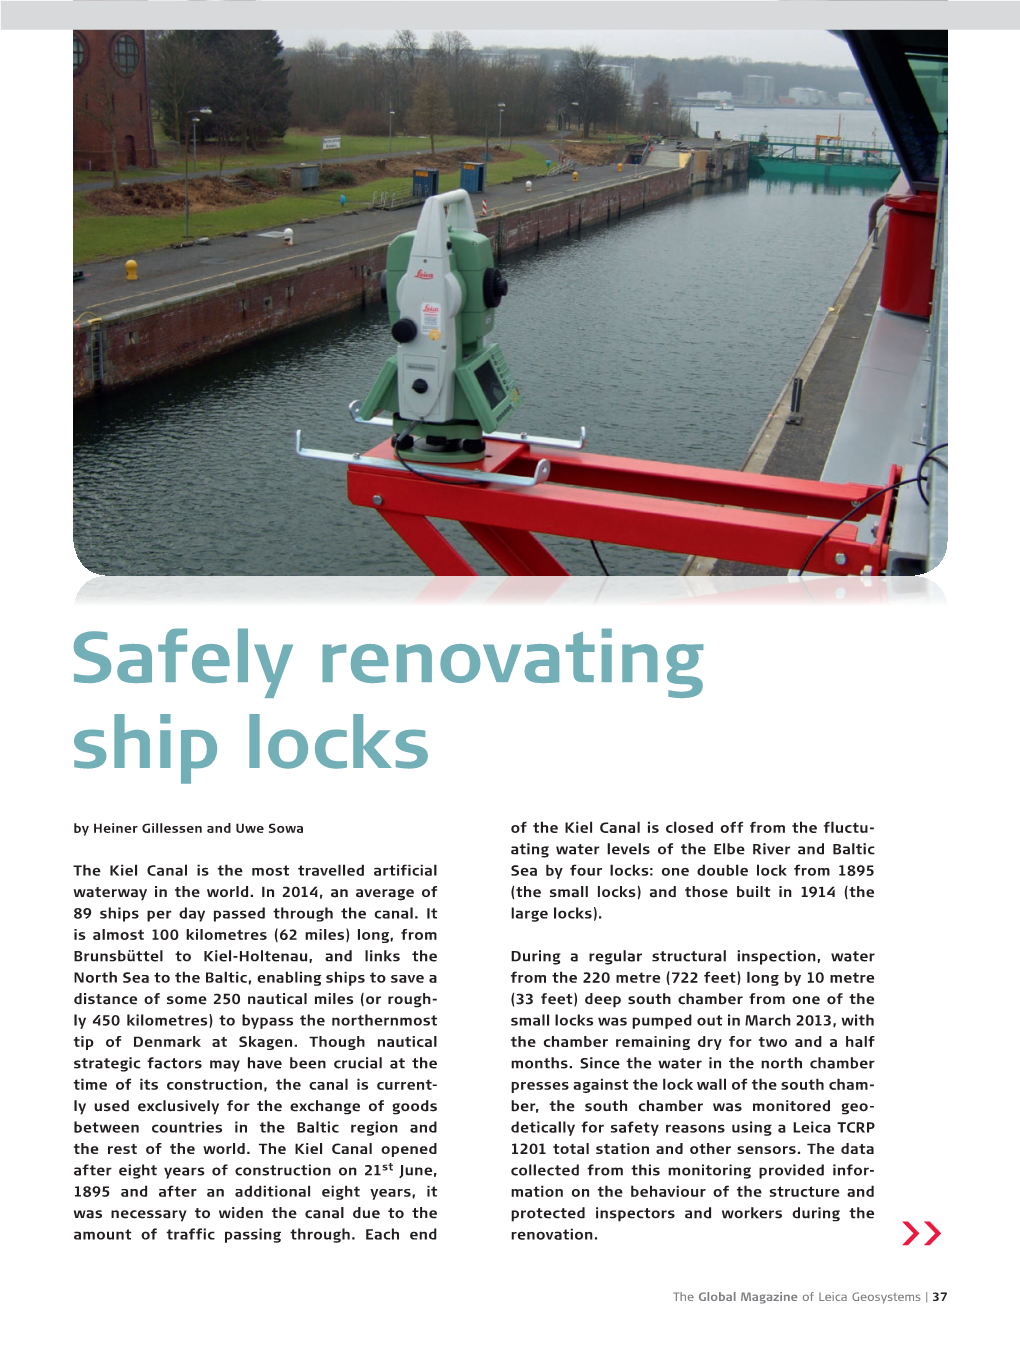 Safely Renovating Ship Locks